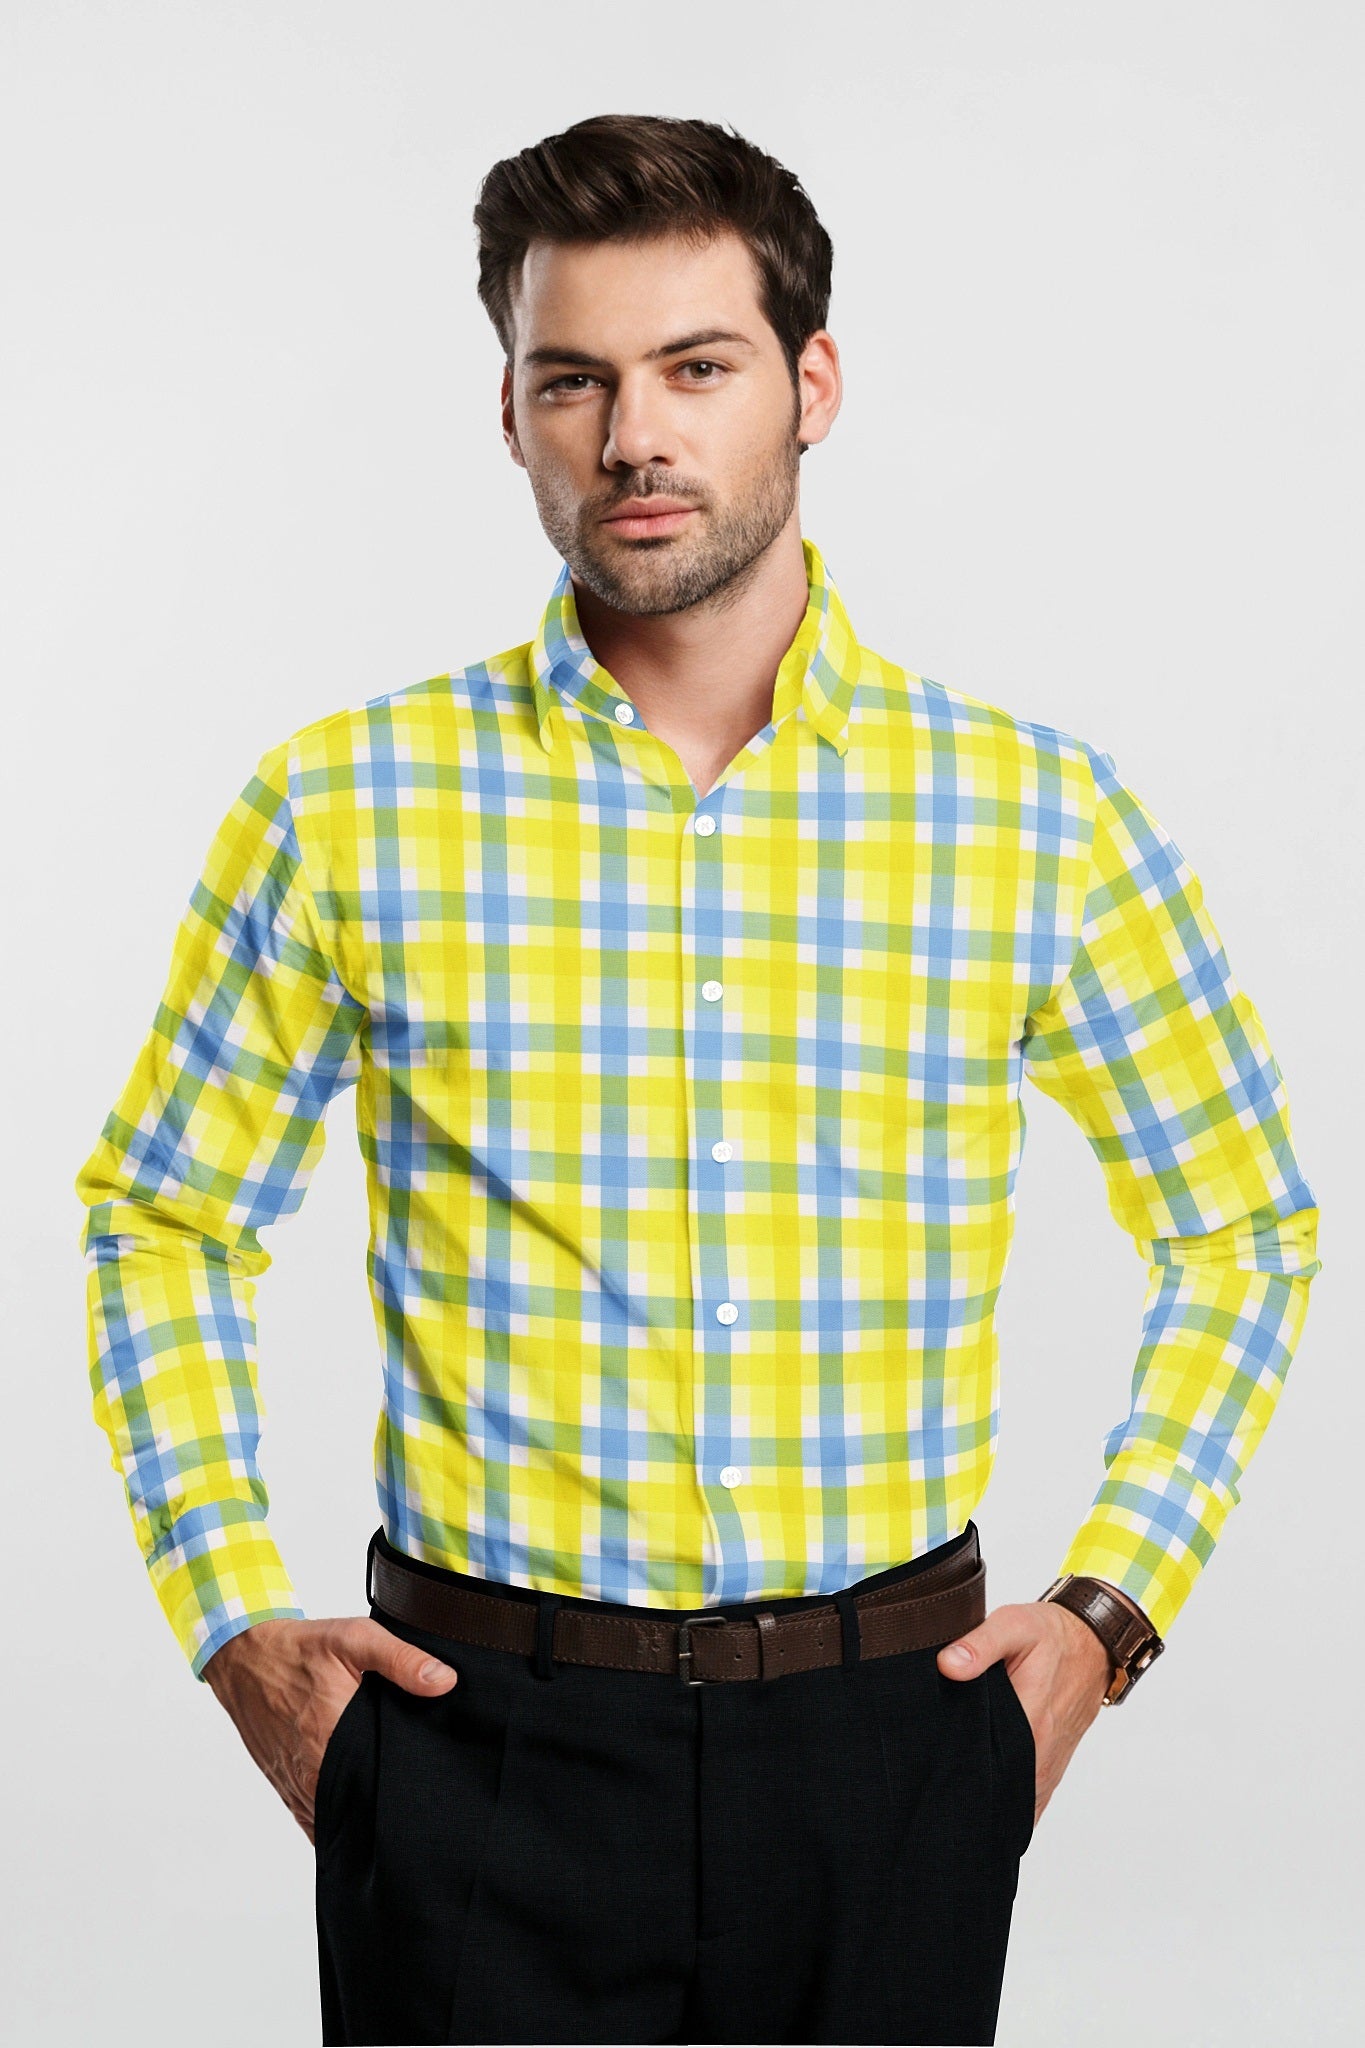 White with Celandine Yellow and Lichen Blue Checks Cotton Shirt